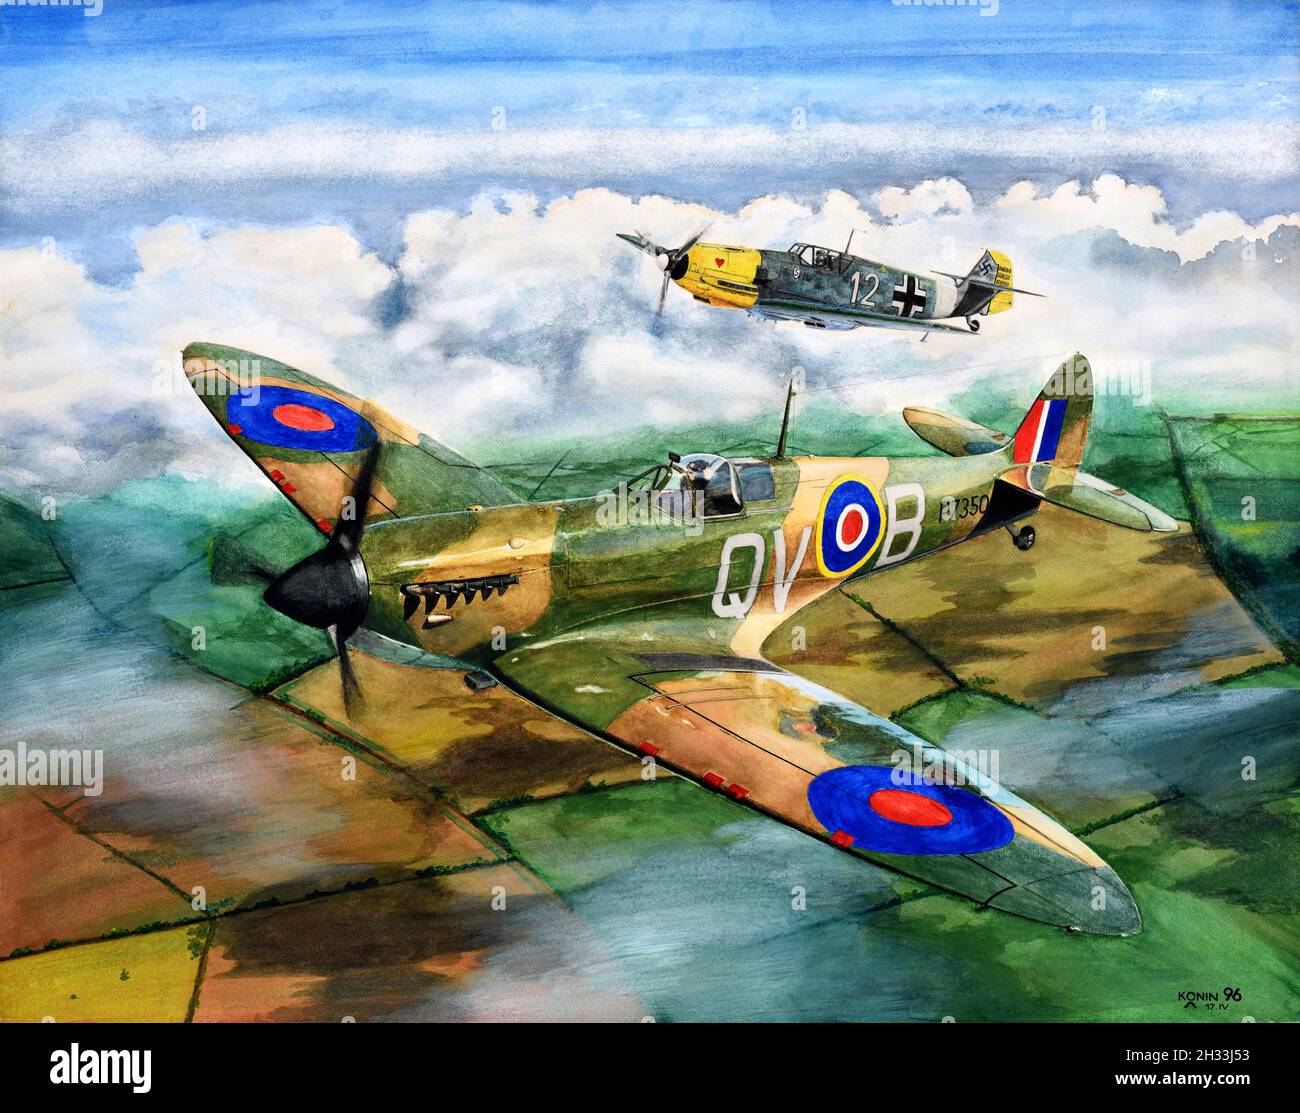 Supermarine Spitfire art Stock Photo